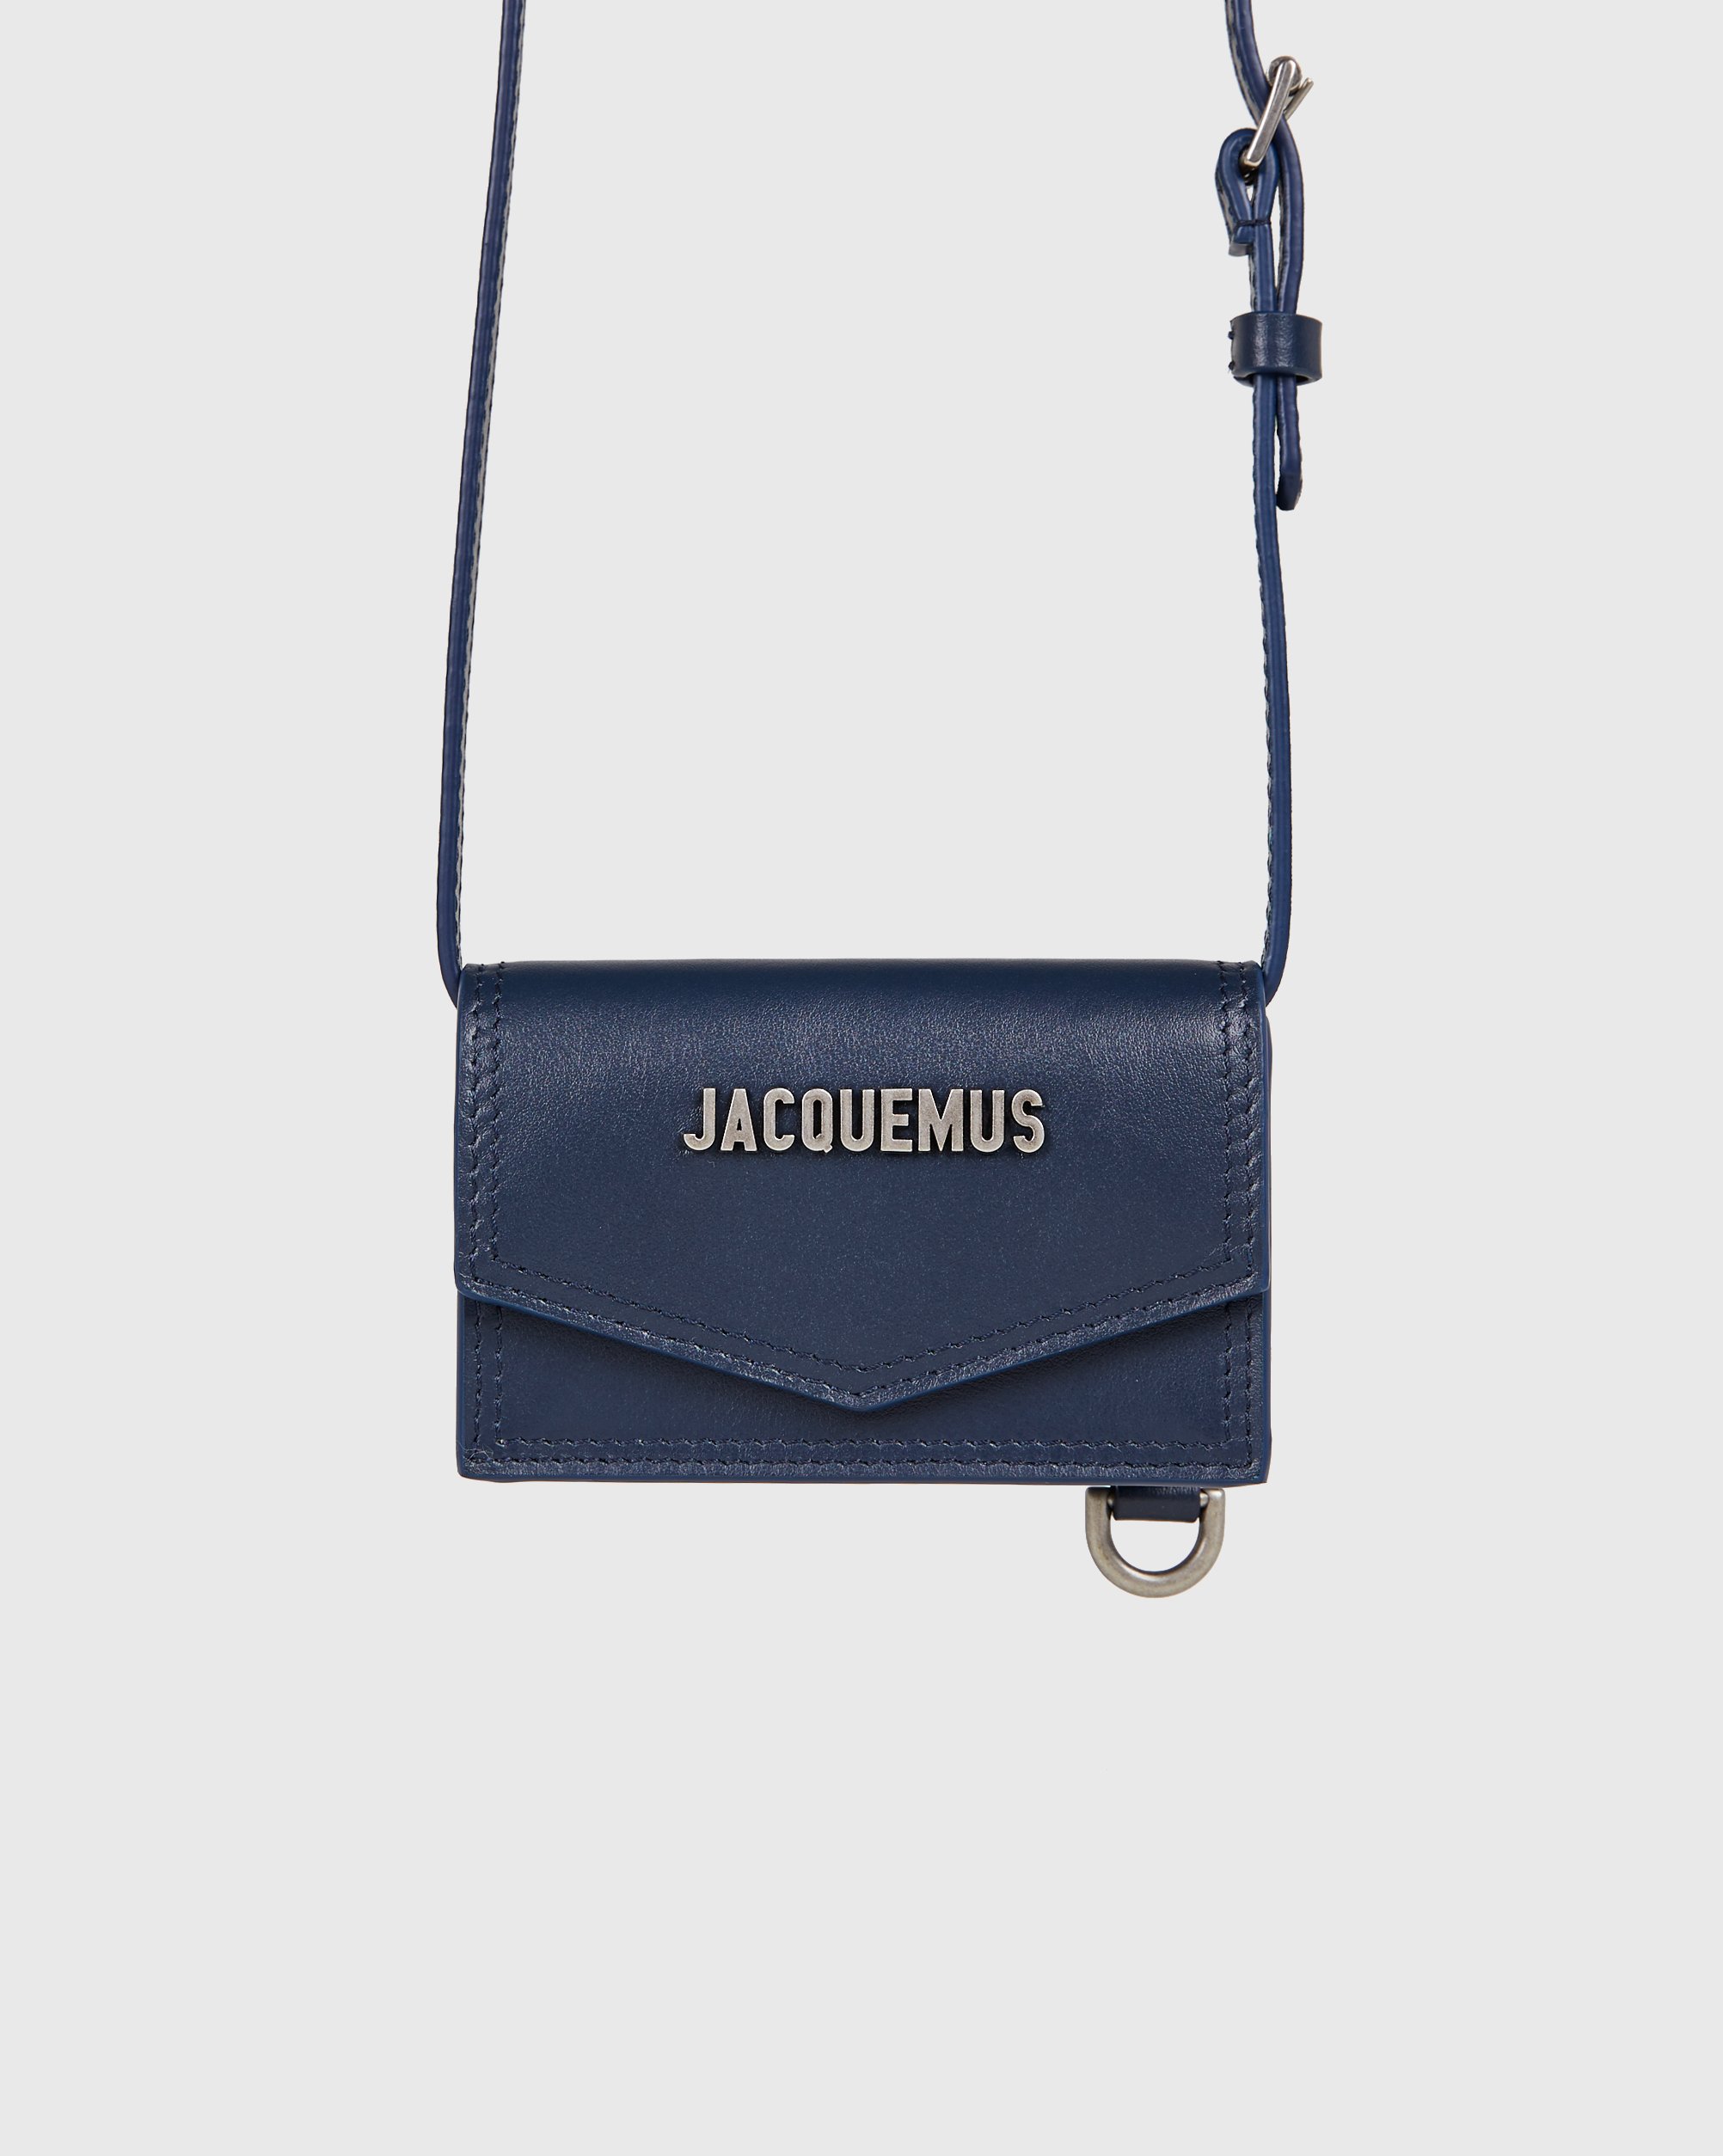 JACQUEMUS – Le Porte Azur Navy | Highsnobiety Shop